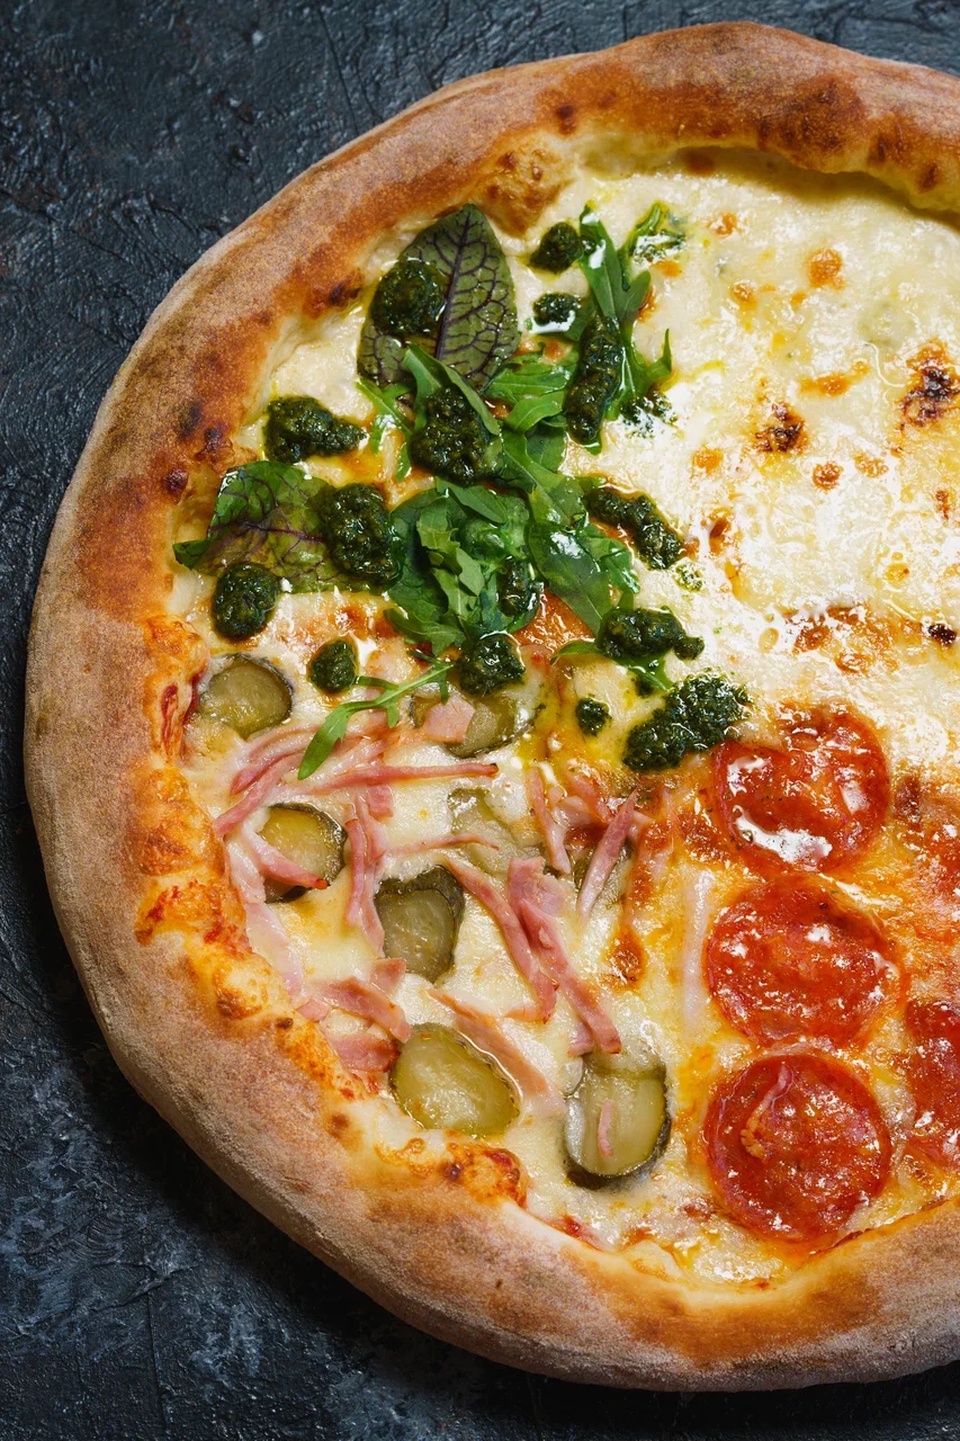 Пицца 4 вкуса - 650 ₽, заказать онлайн.